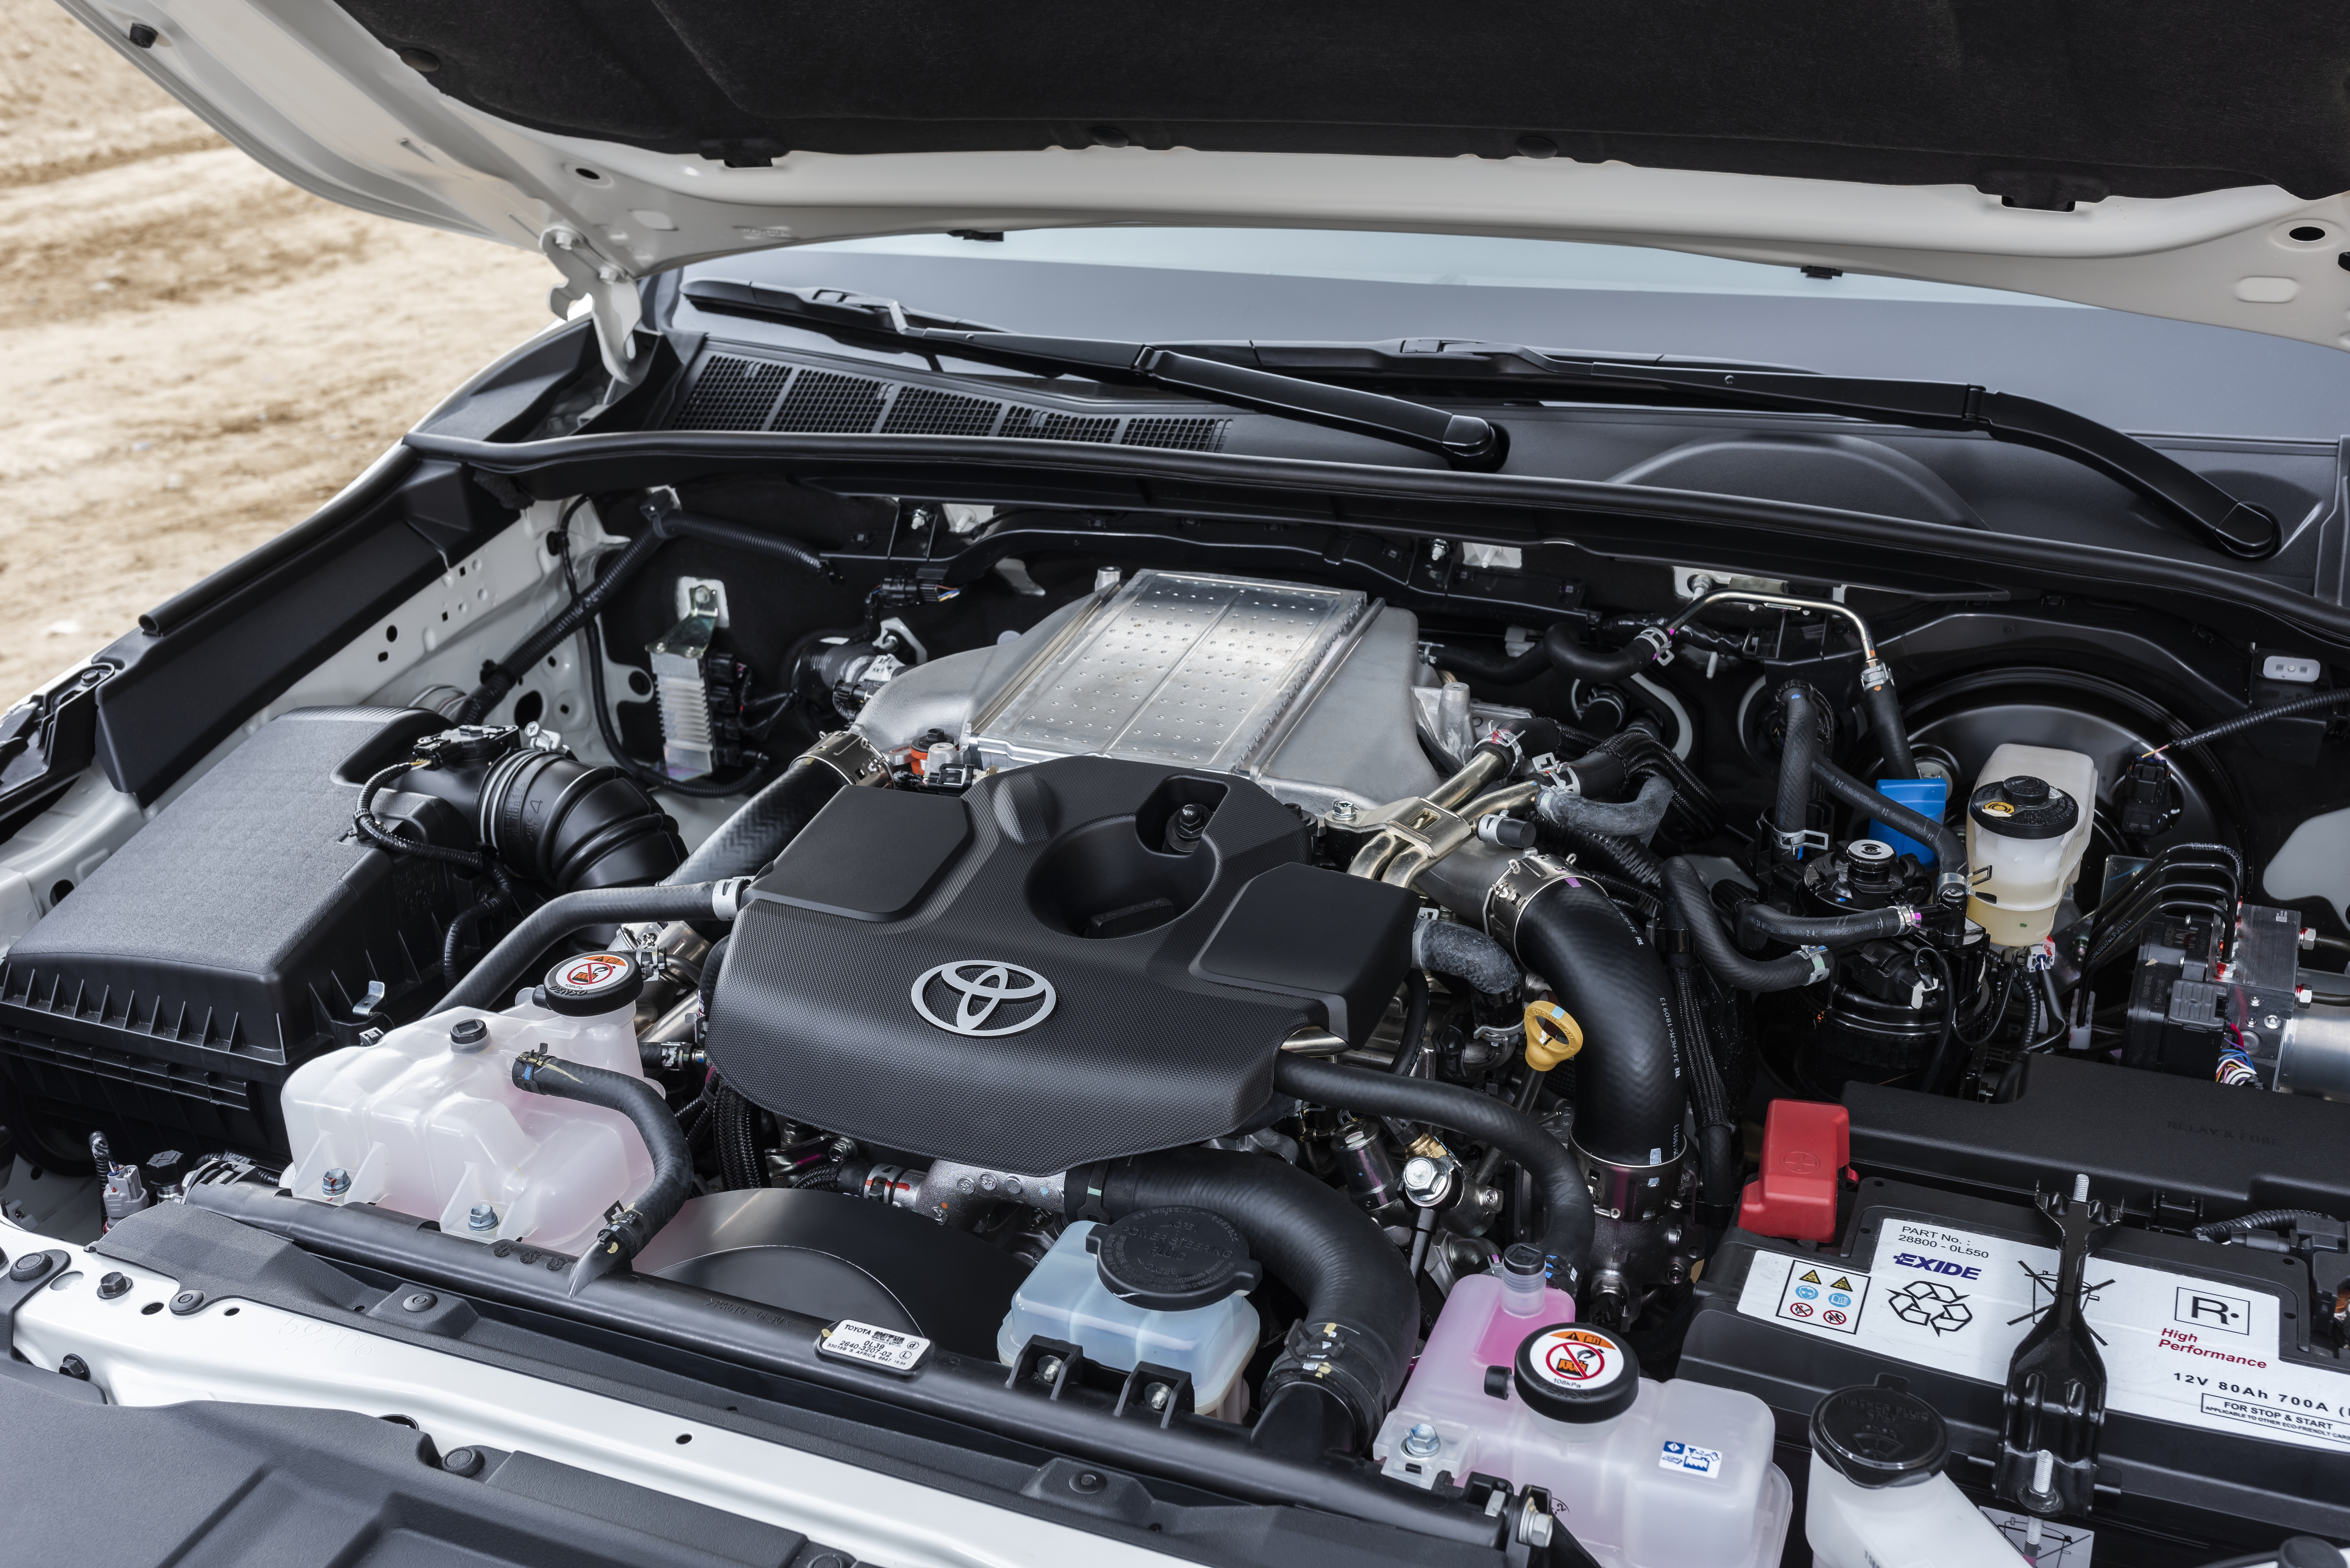 2.2 л 150 л с дизель. Toyota Hilux 2020 двигатель. АКБ Toyota Hilux 8. Тойота Хайлюкс мотор 2.4 дизель. Toyota Hilux 2019.